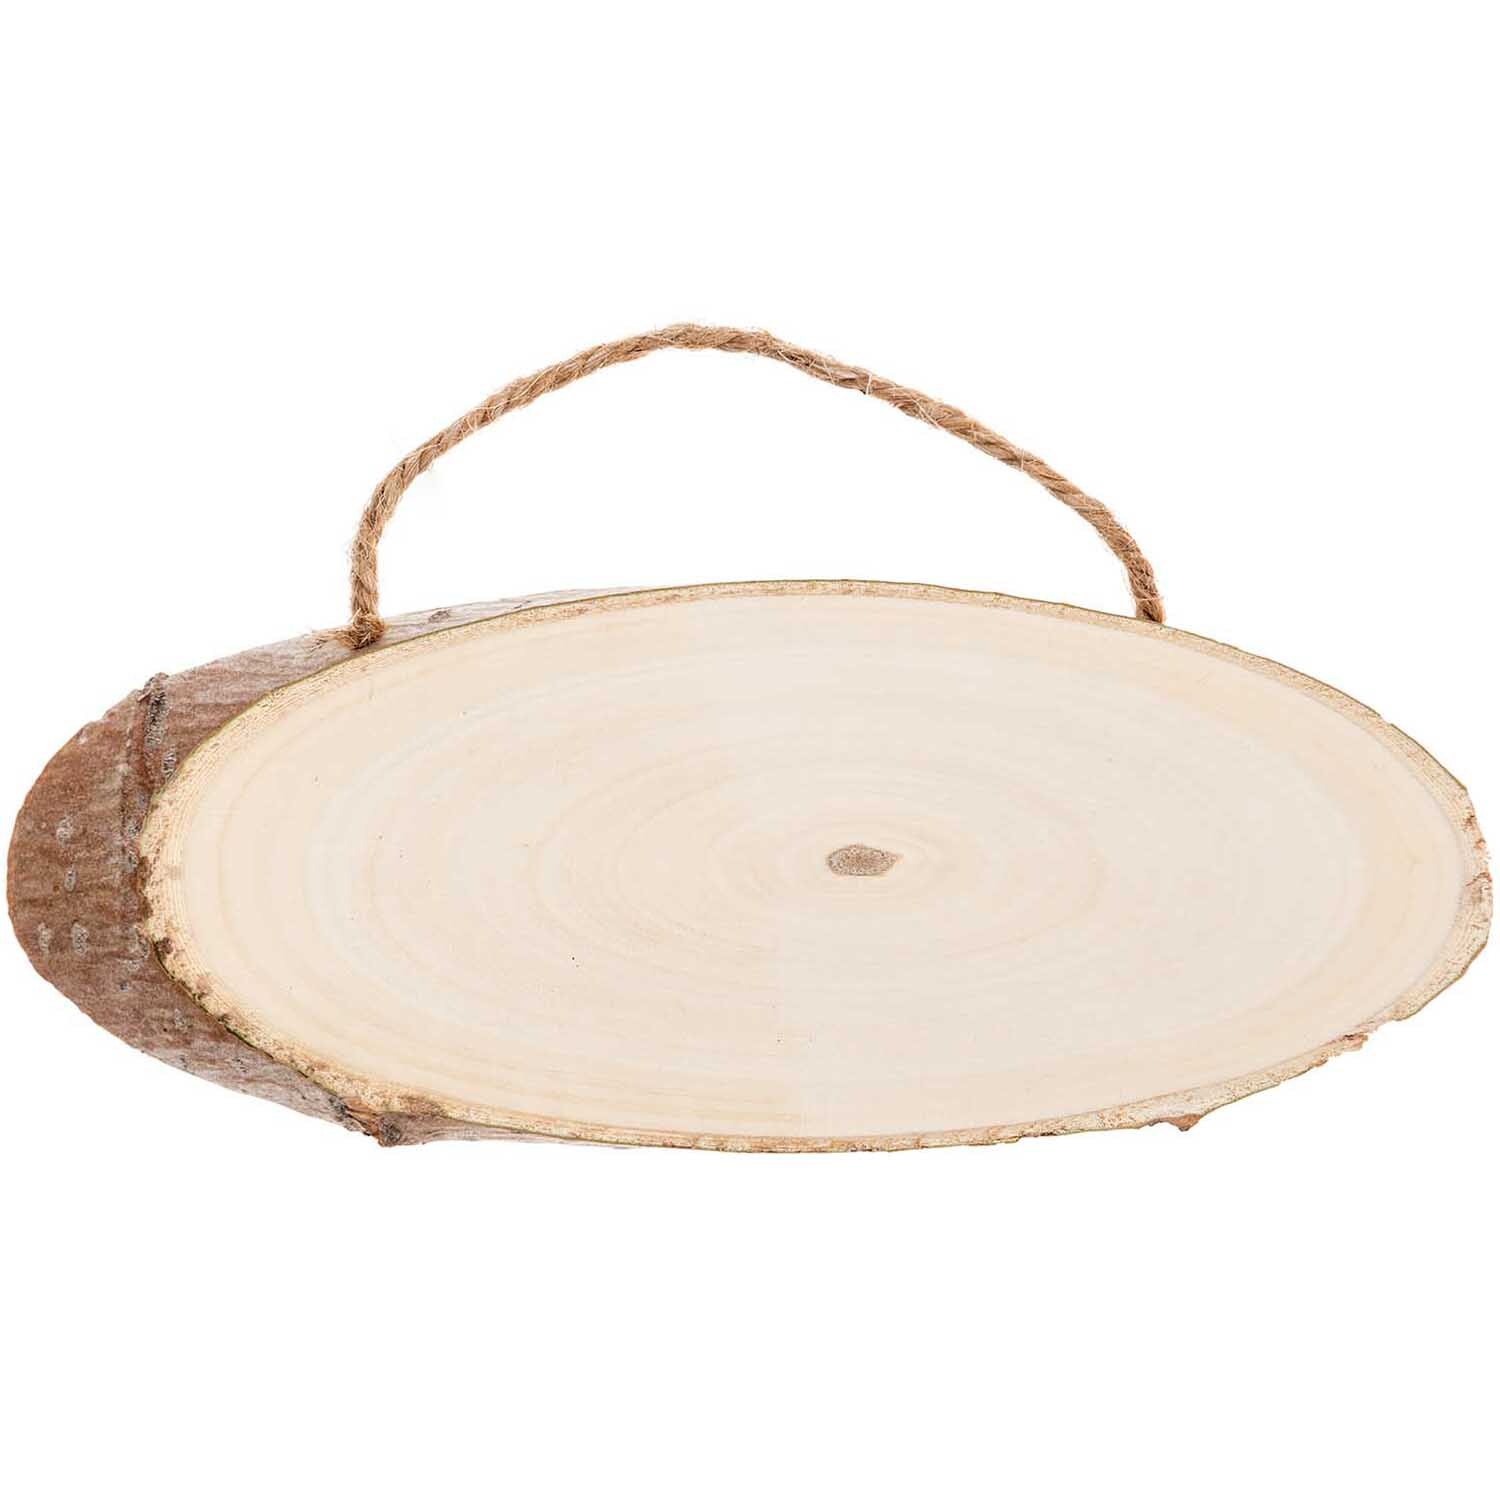 Holzschild oval 14-18x7-10cm 1cm dick